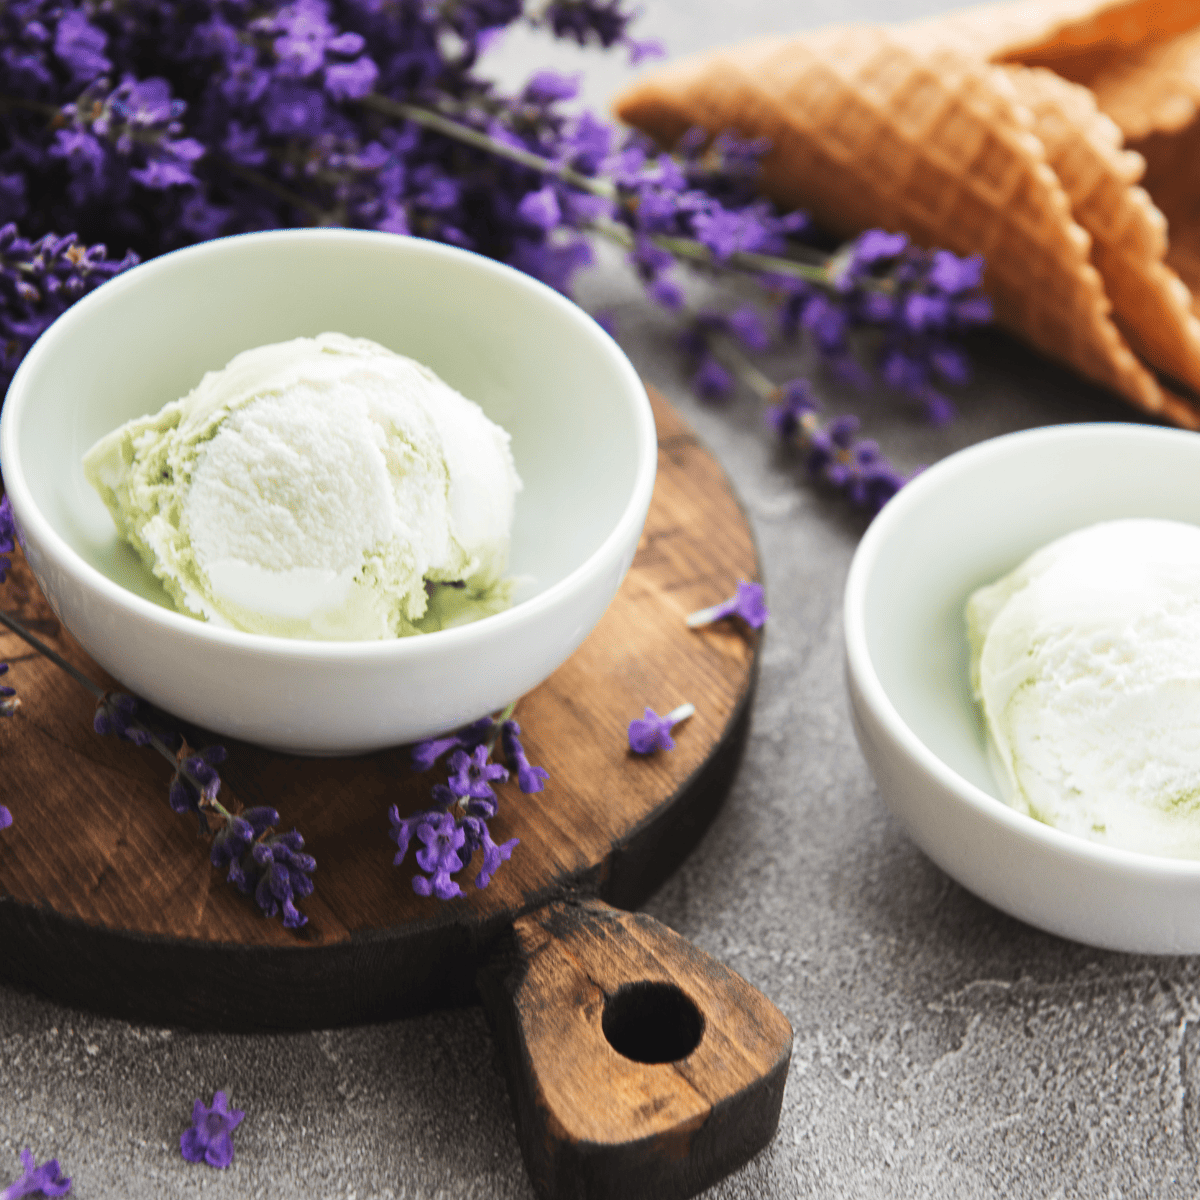 Elevate Your Dessert Game with the Ninja NC301 CREAMi Ice Cream